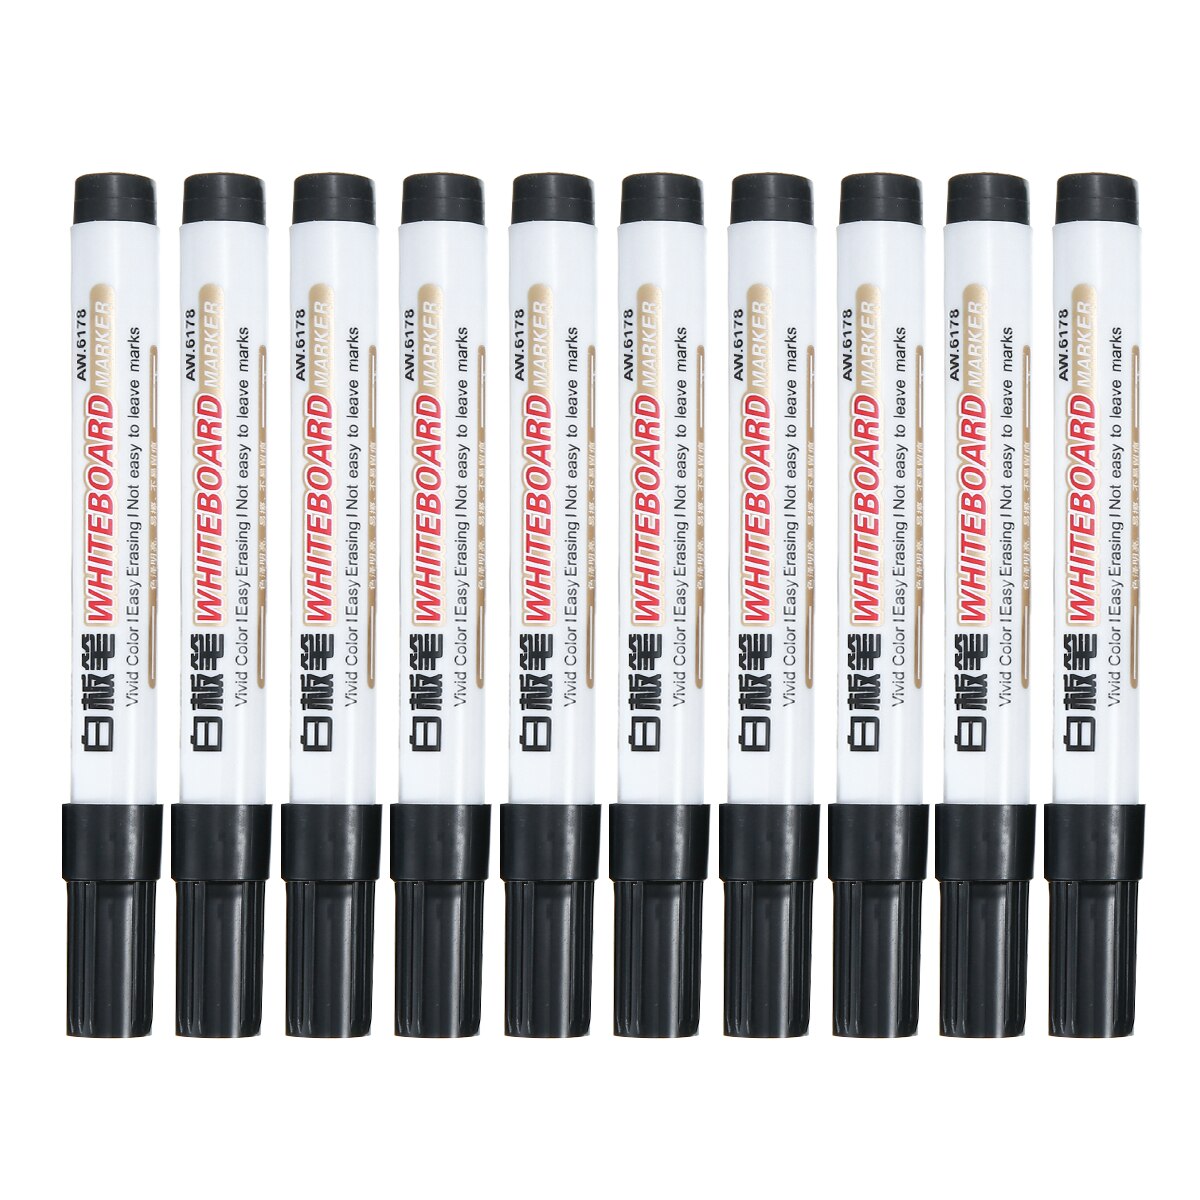 10pcs Erasable White Board MarkerS Drywipe Pens Black Dry Wipe Premium Marker Pens Office School Writing Supply